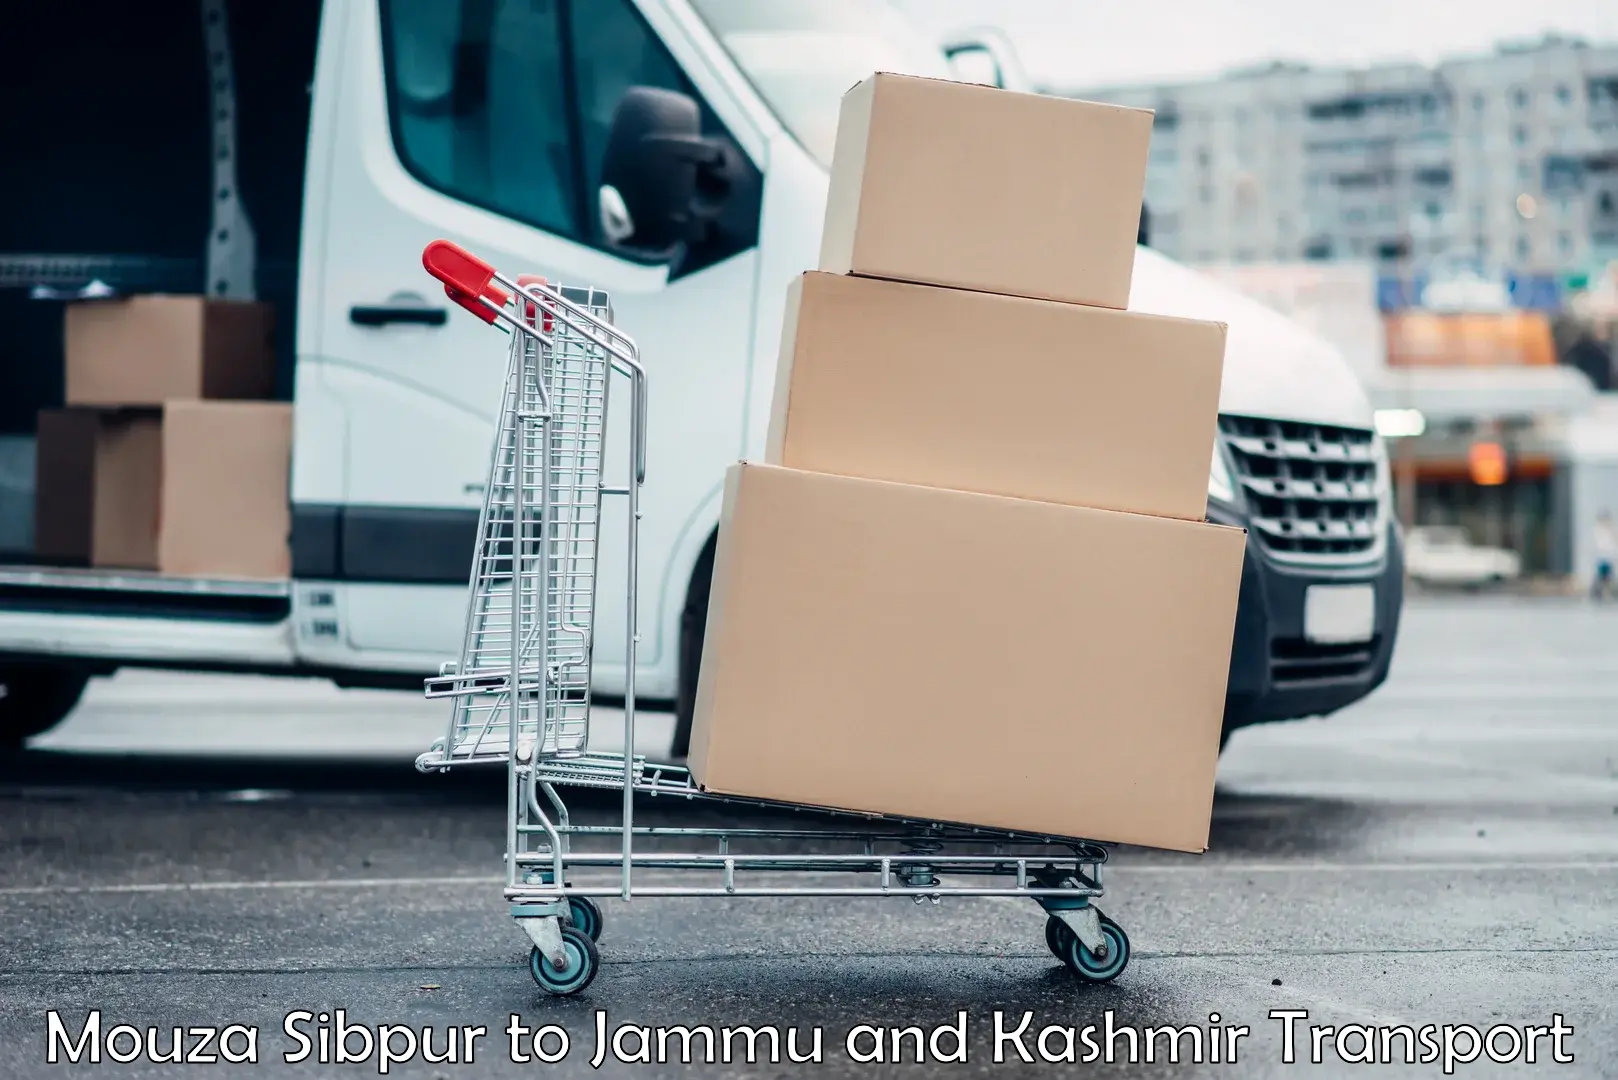 Lorry transport service Mouza Sibpur to University of Jammu